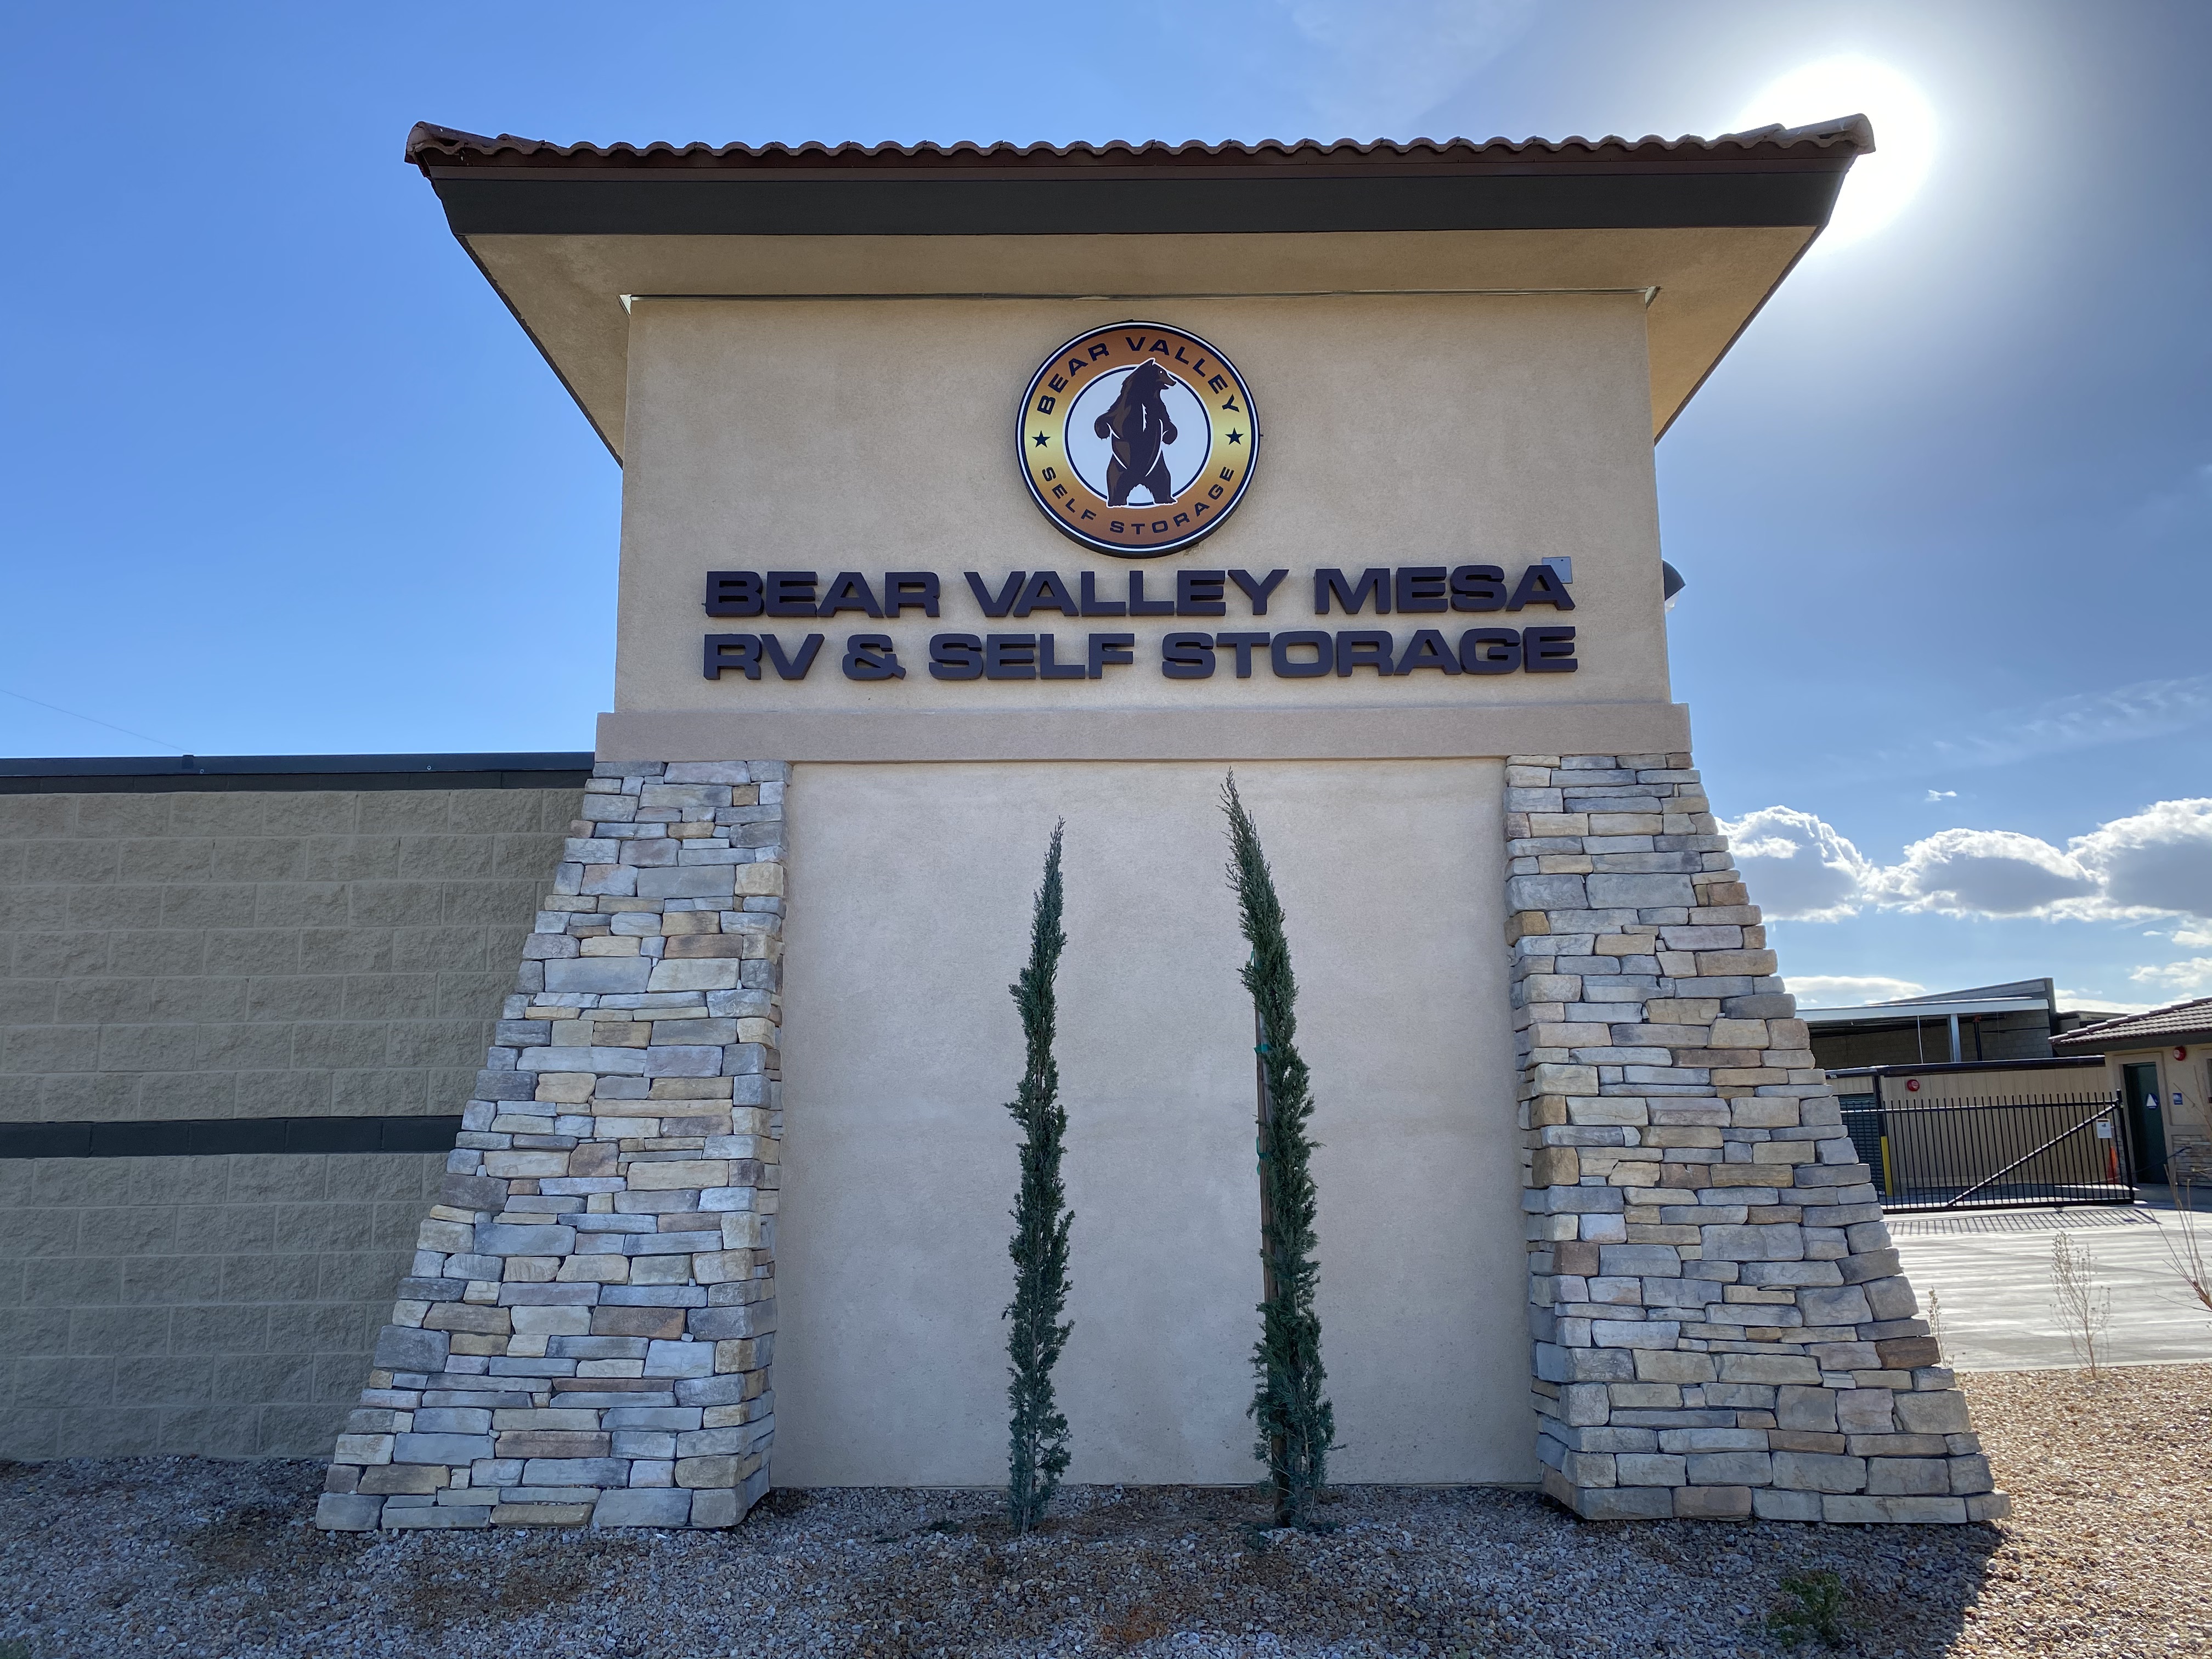 Bear Valley Mesa Rv & Self Storage